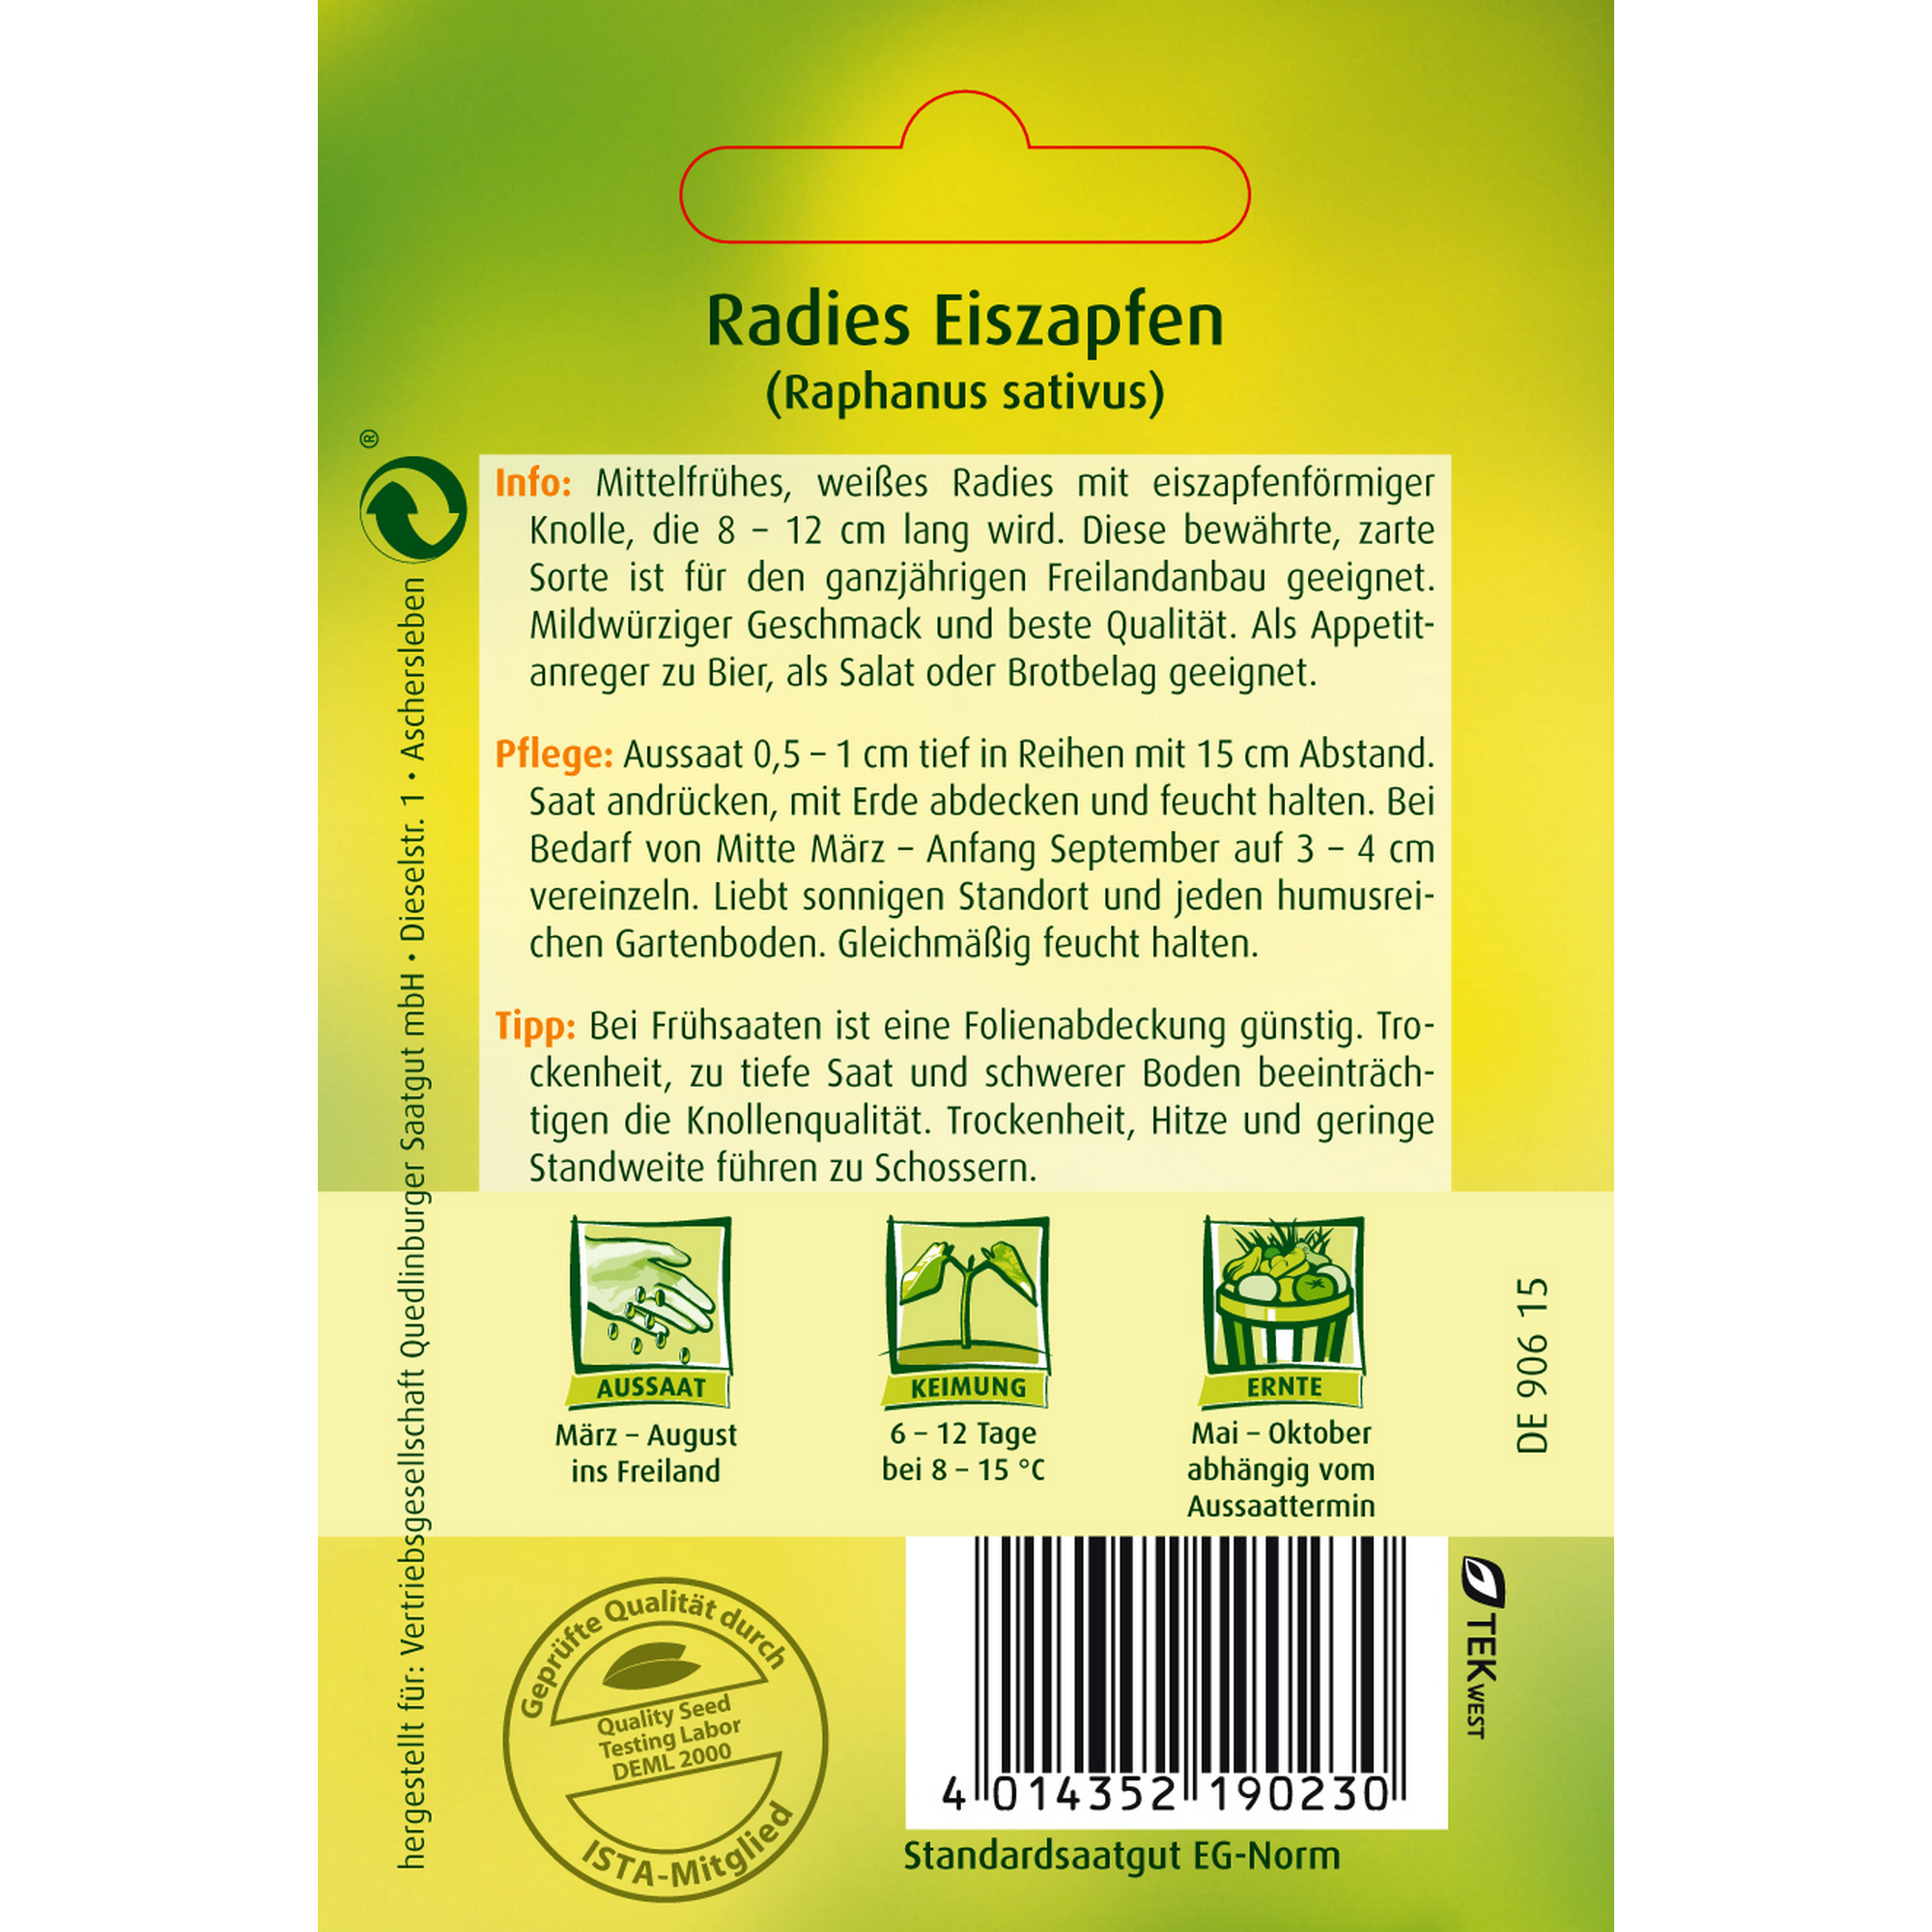 Radies 'Eiszapfen' + product picture